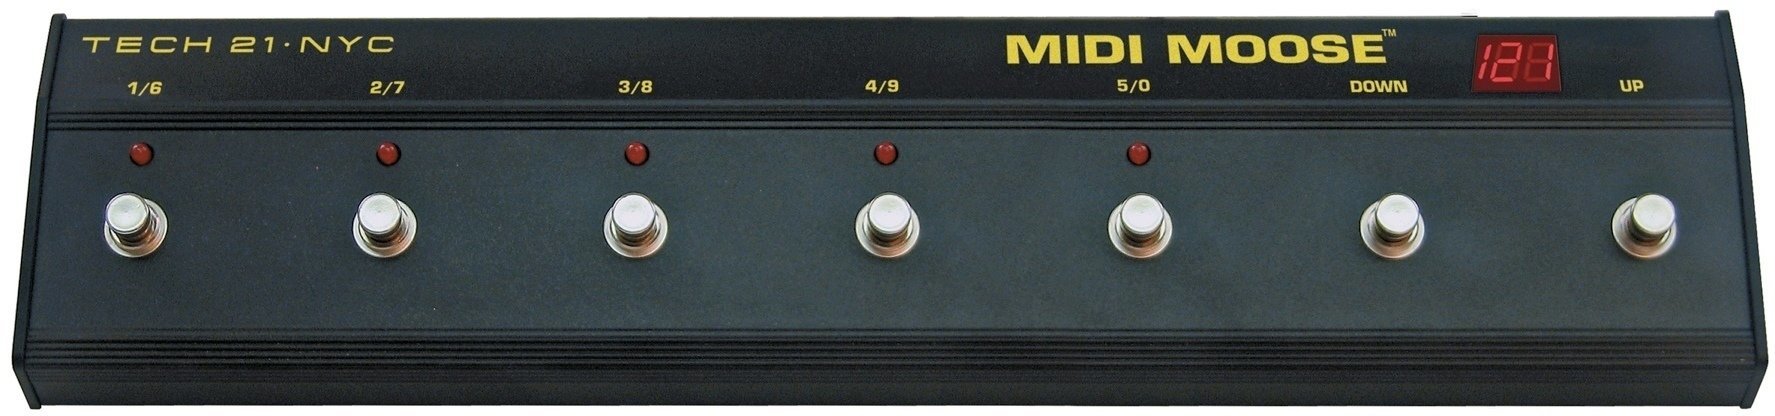 MIDI Controller Tech 21 MIDI Moose